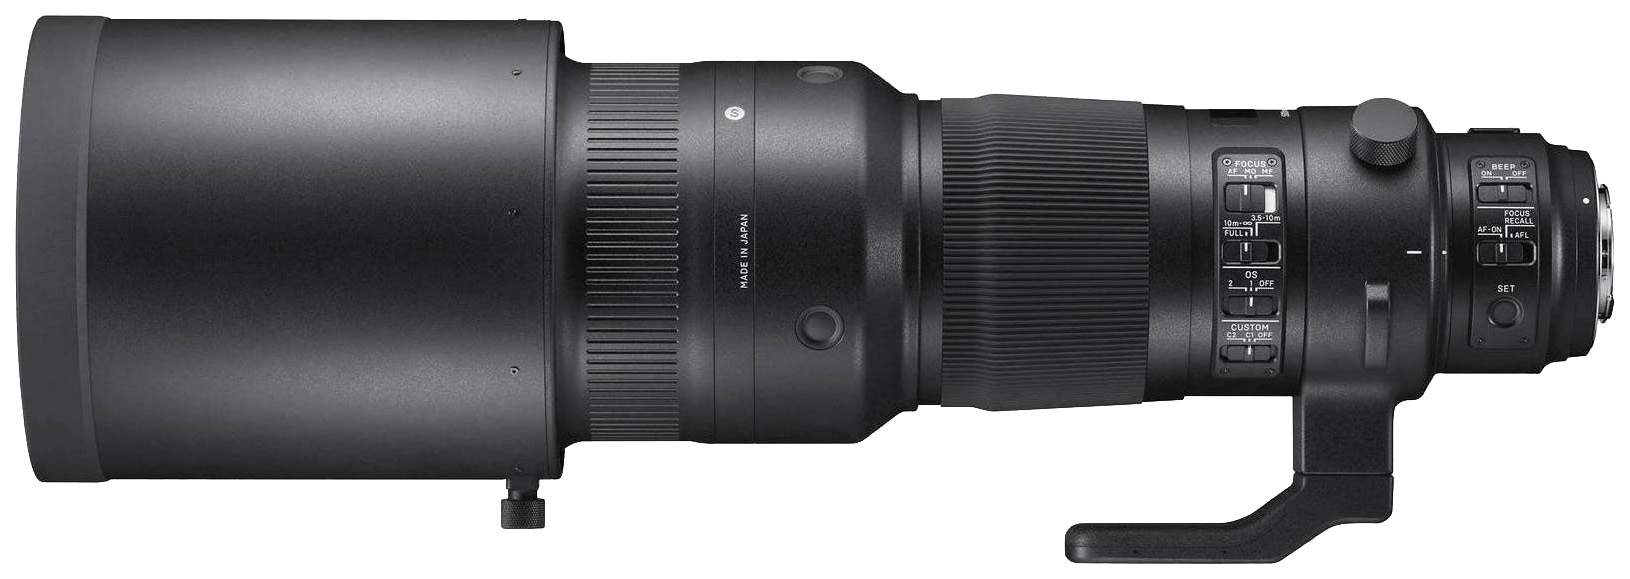 Sigma 500mm. Sigma 500mm f 4 DG os HSM Sports Lens for Canon EF. Sigma объективы 500 мм. Sigma af 50-500mm f/4.5-6.3 apo DG os HSM Nikon f. Canon 500mm.